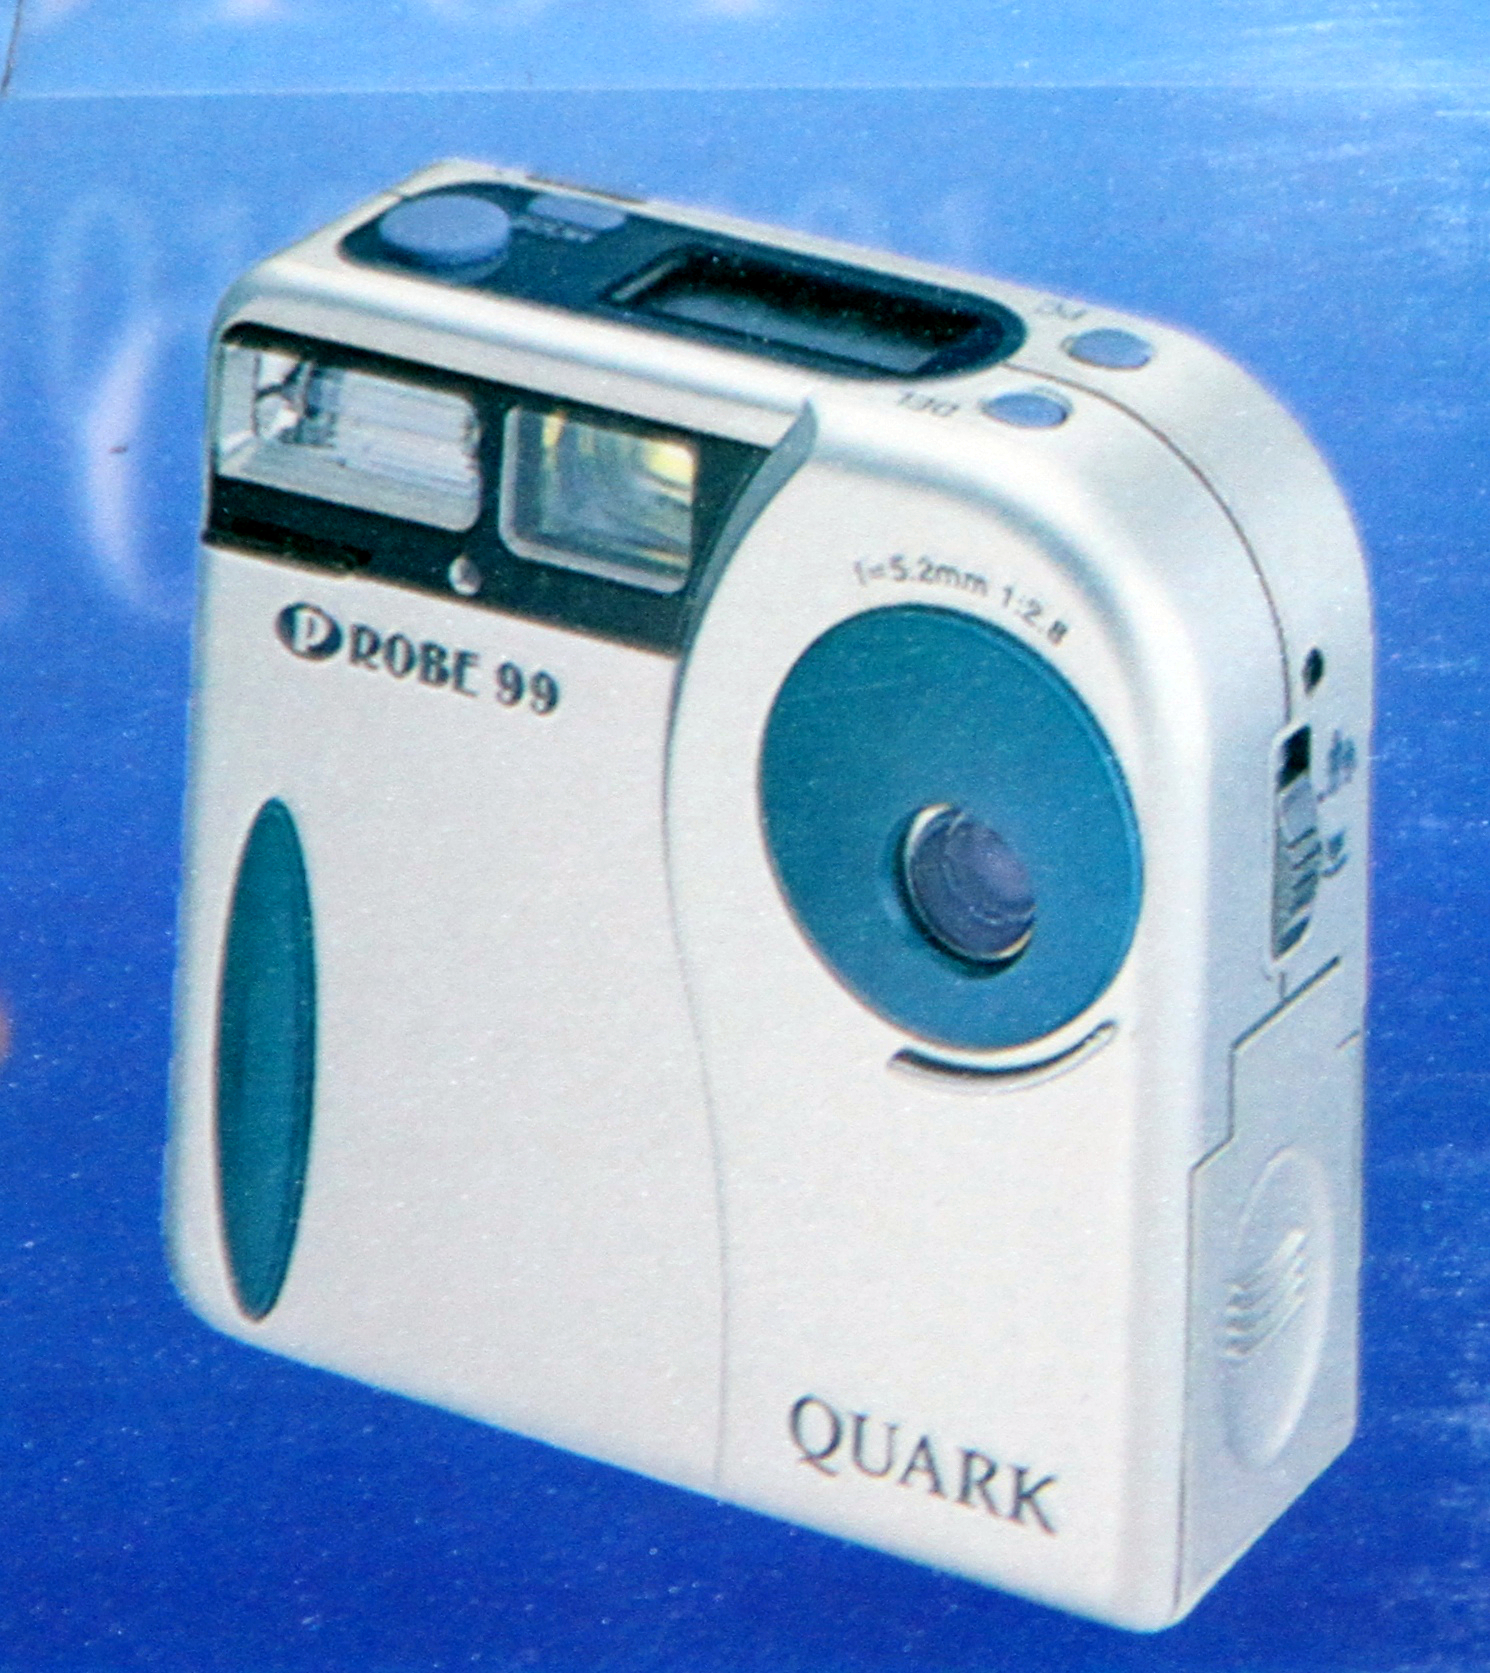 Quark Probe 99 digital camera